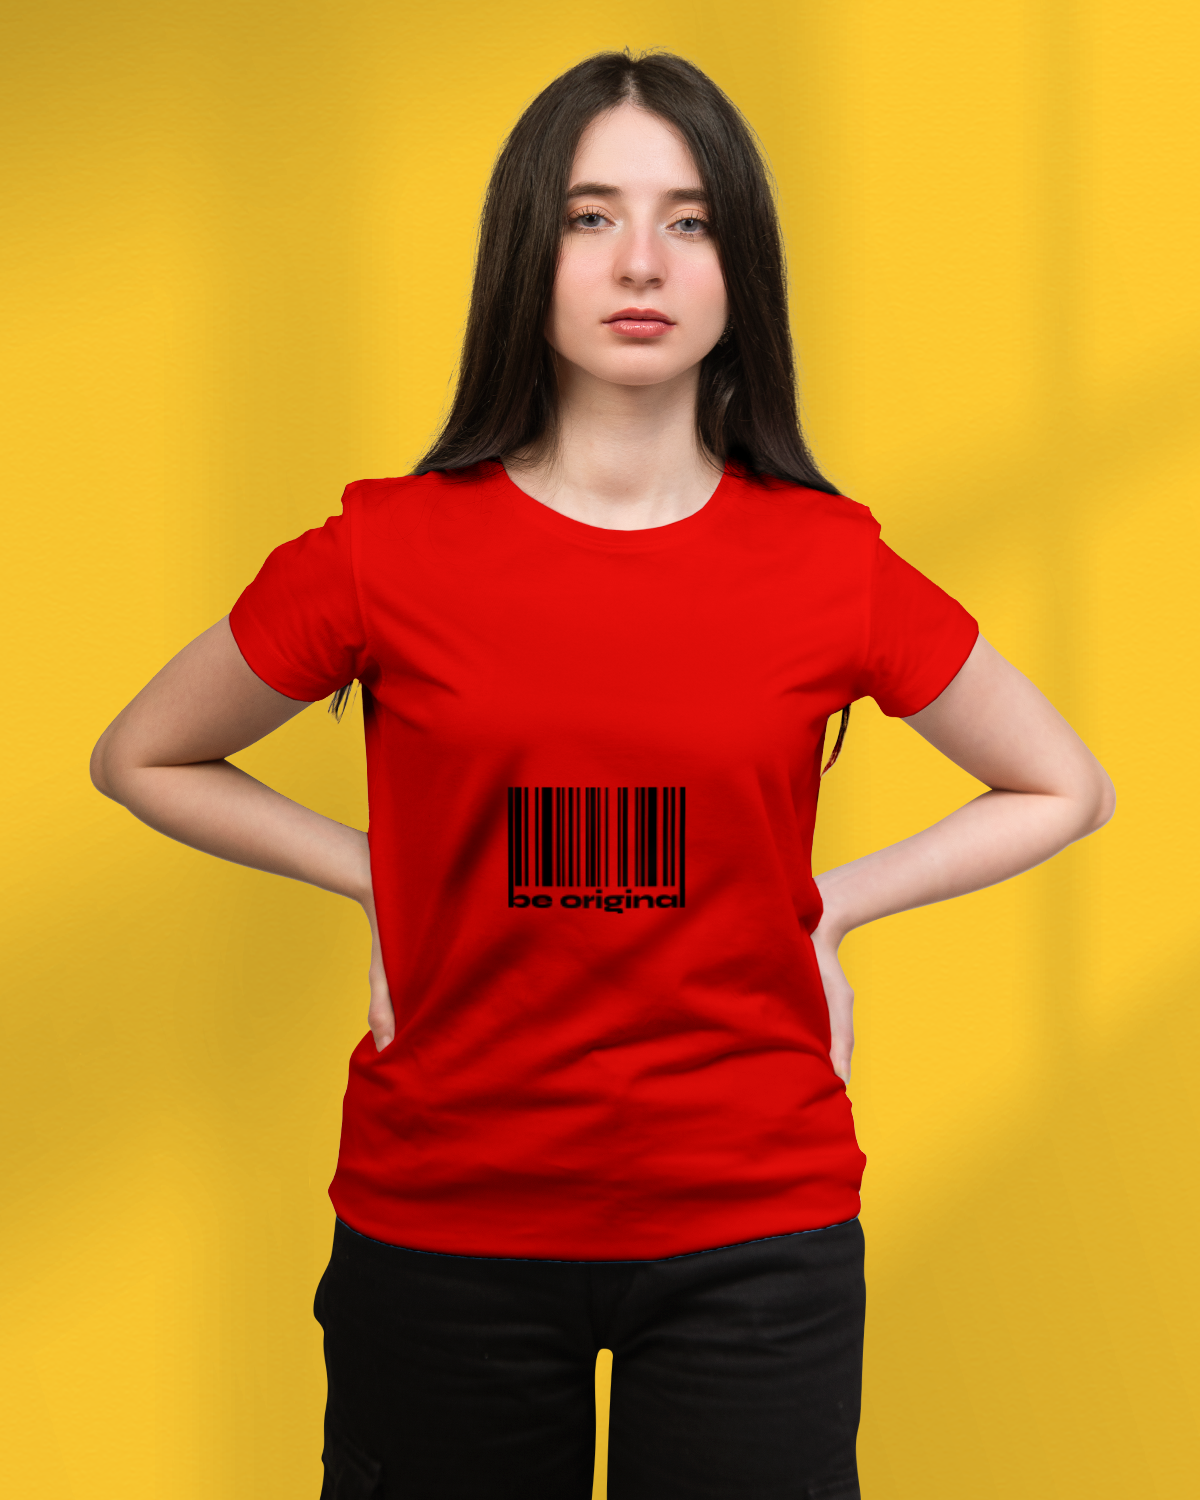 T-shirt For Women (Be Original)